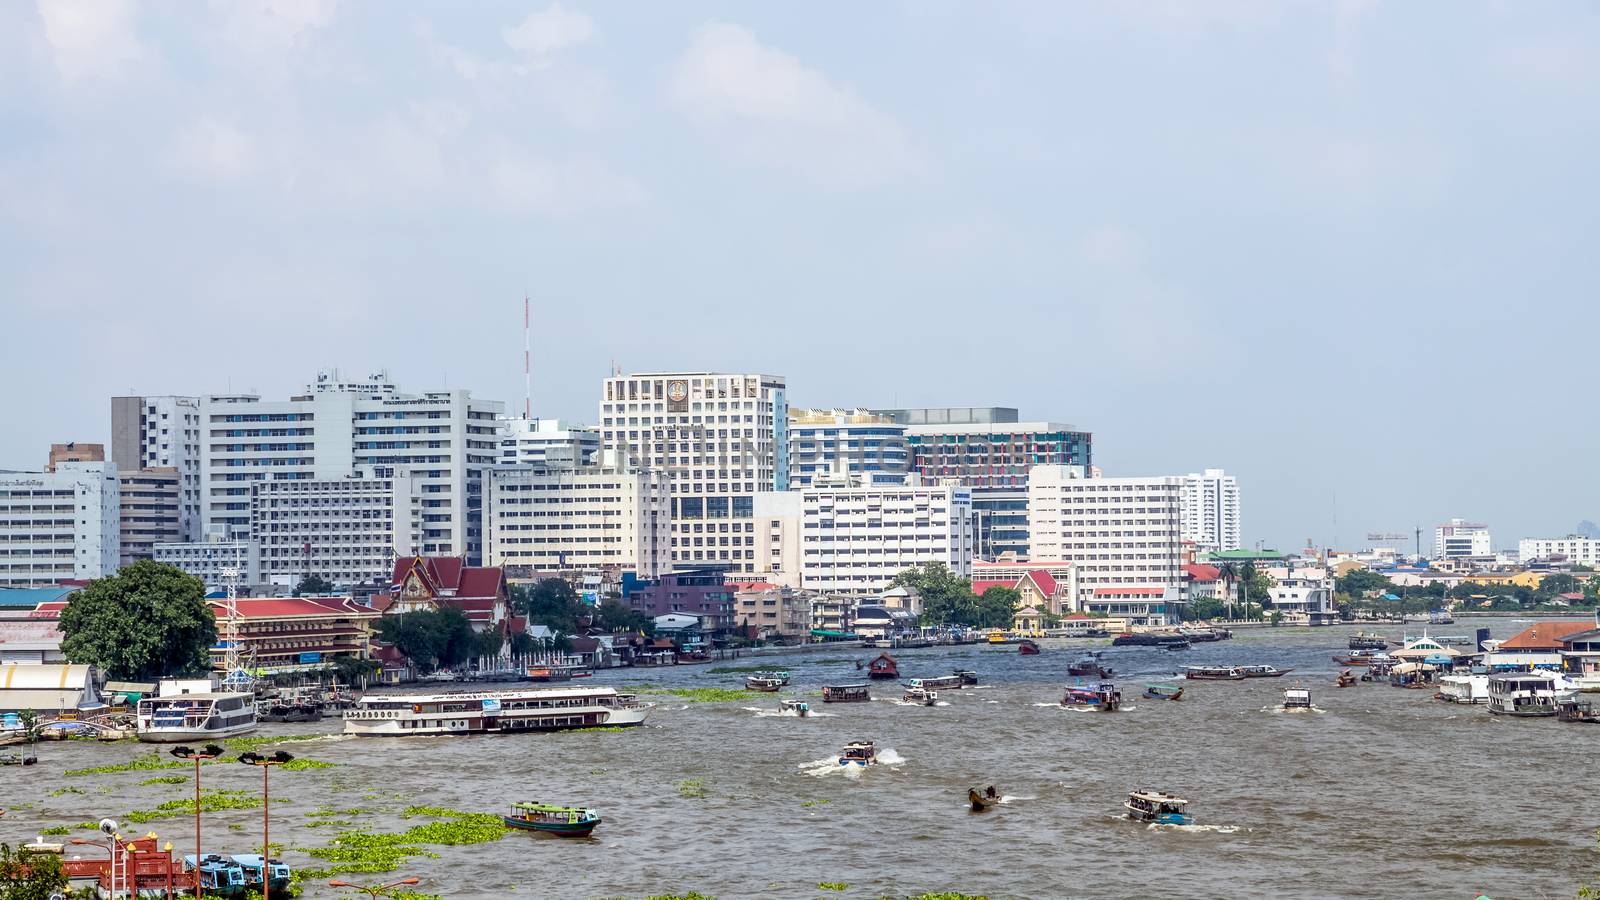 Cityscape of Bangkok by pawel_szczepanski